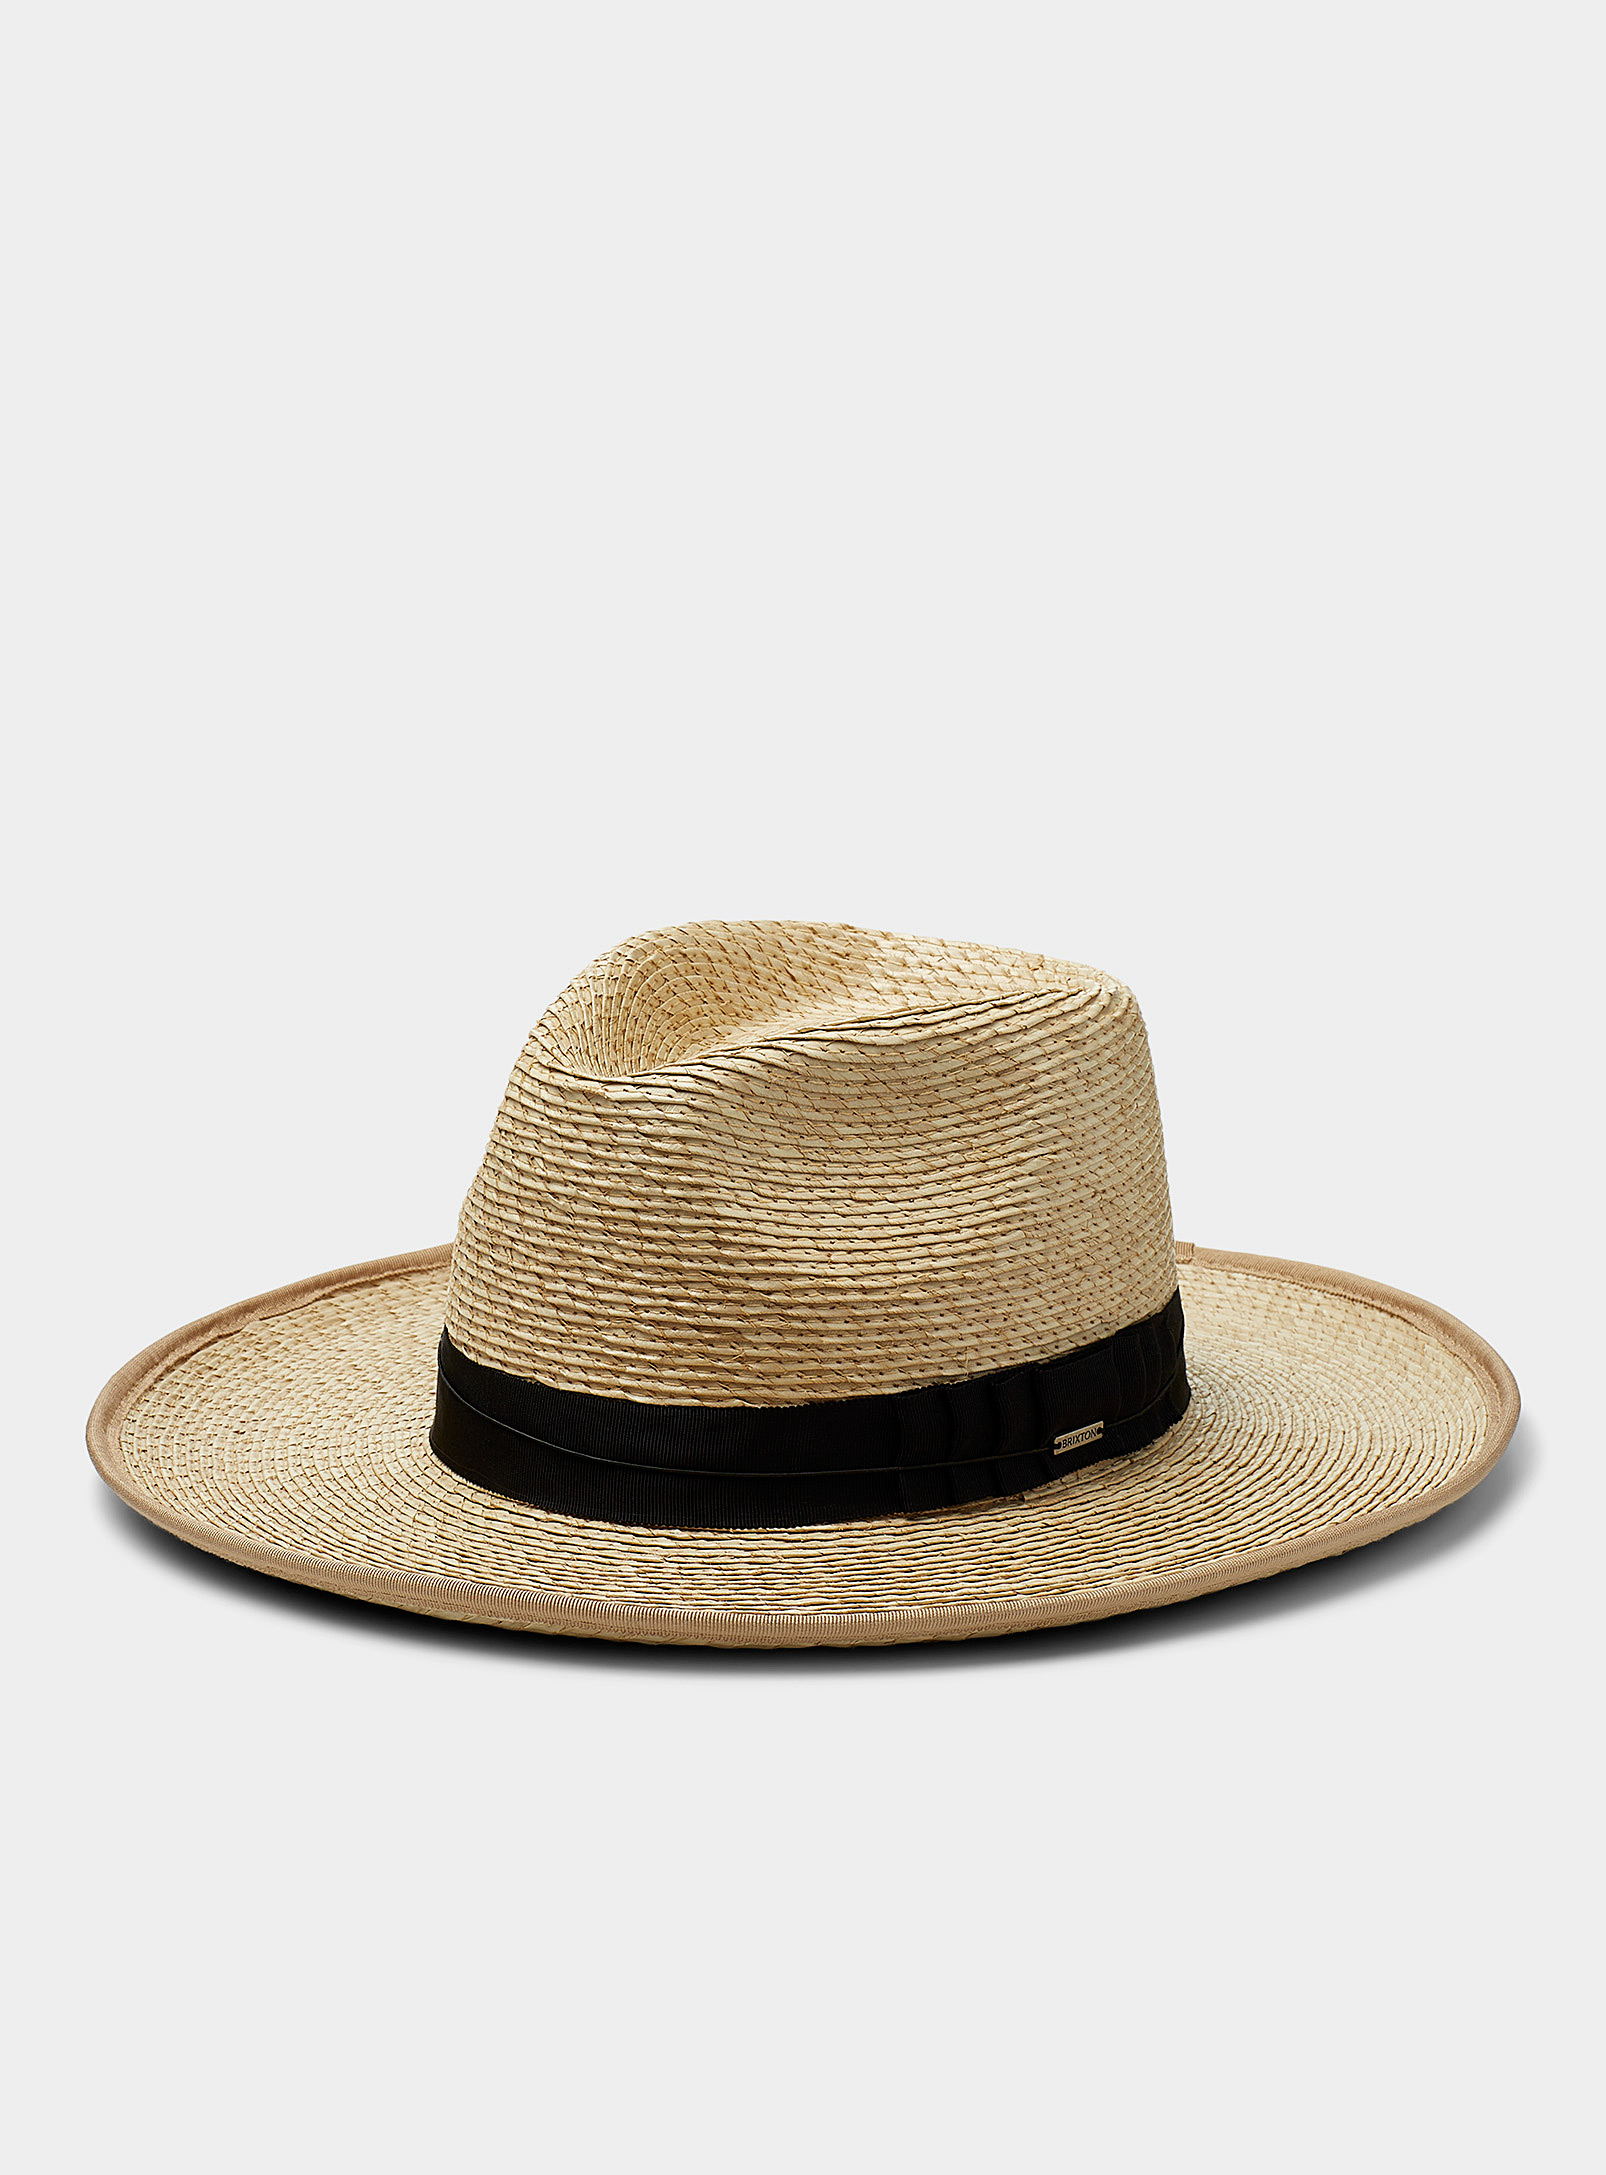 Brixton - Men's Reno straw sun hat